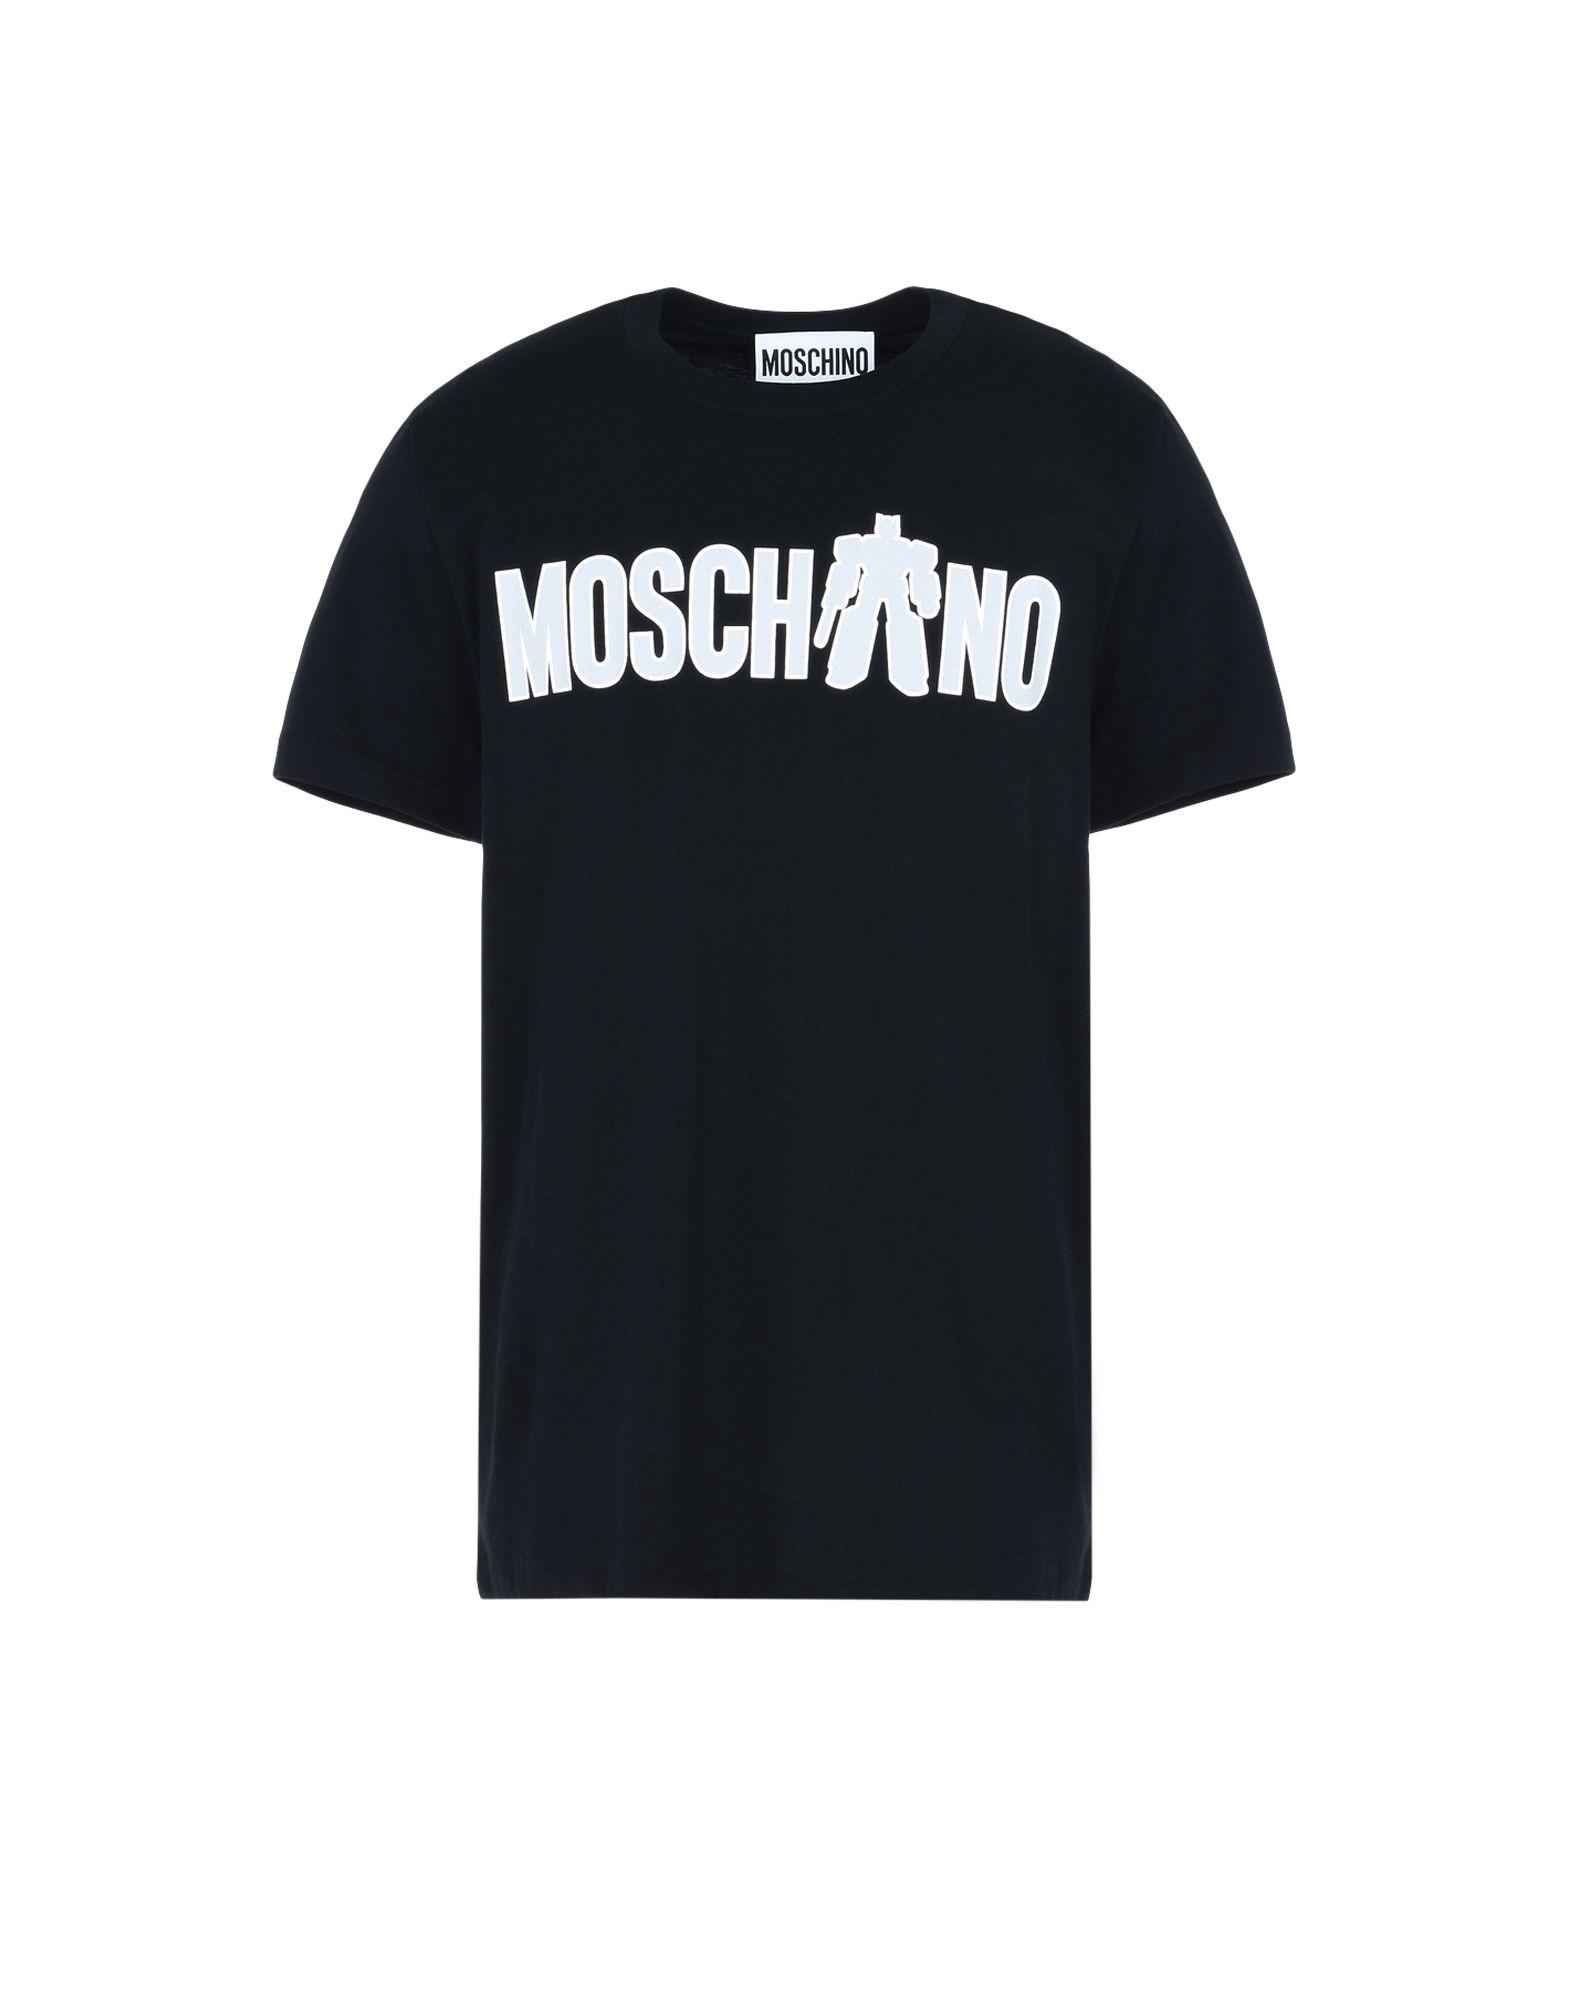 moschino transformers t shirt